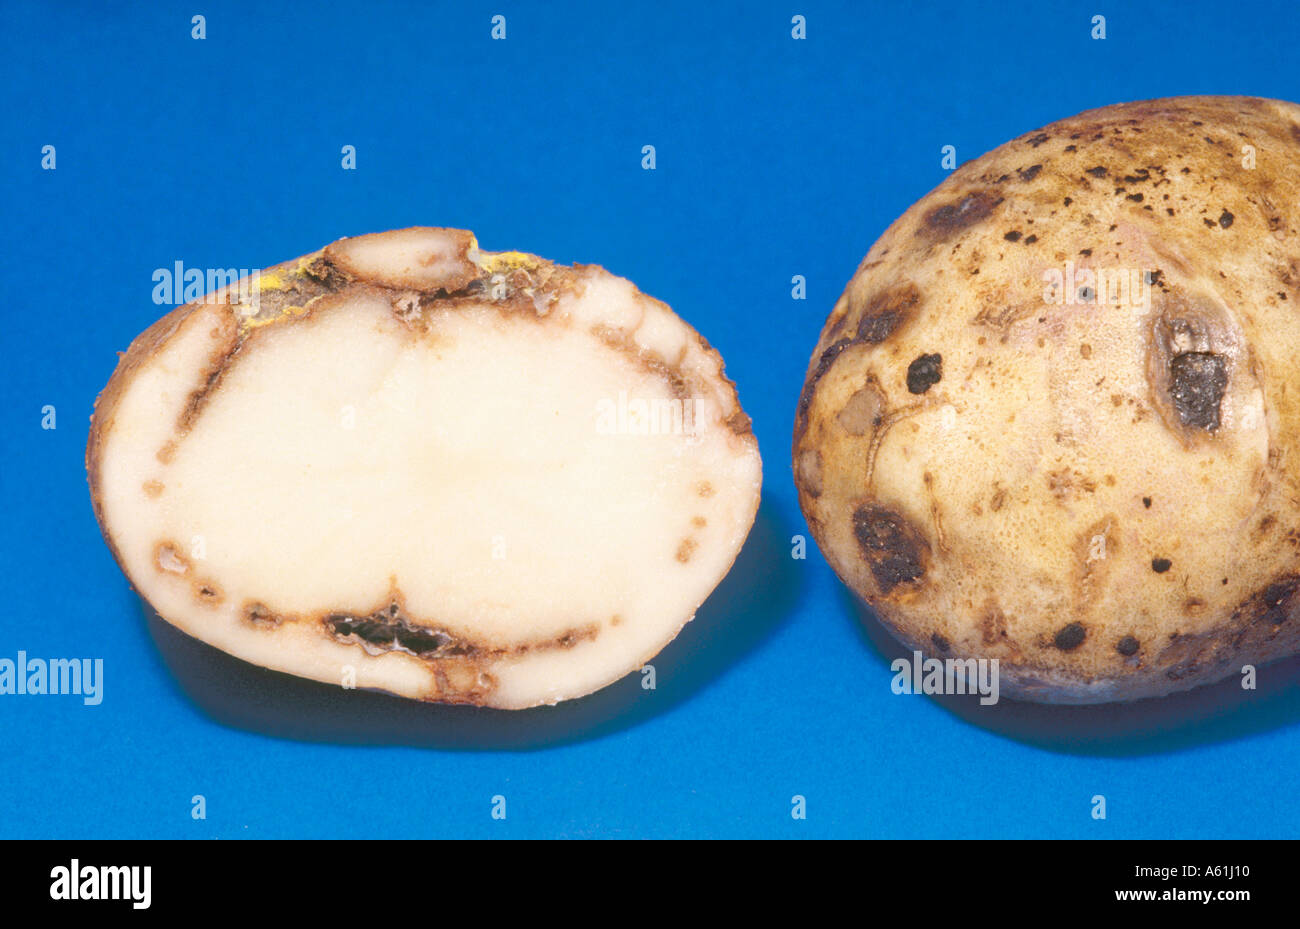 Bacterial wilt symptoms on potato tuber Stock Photo